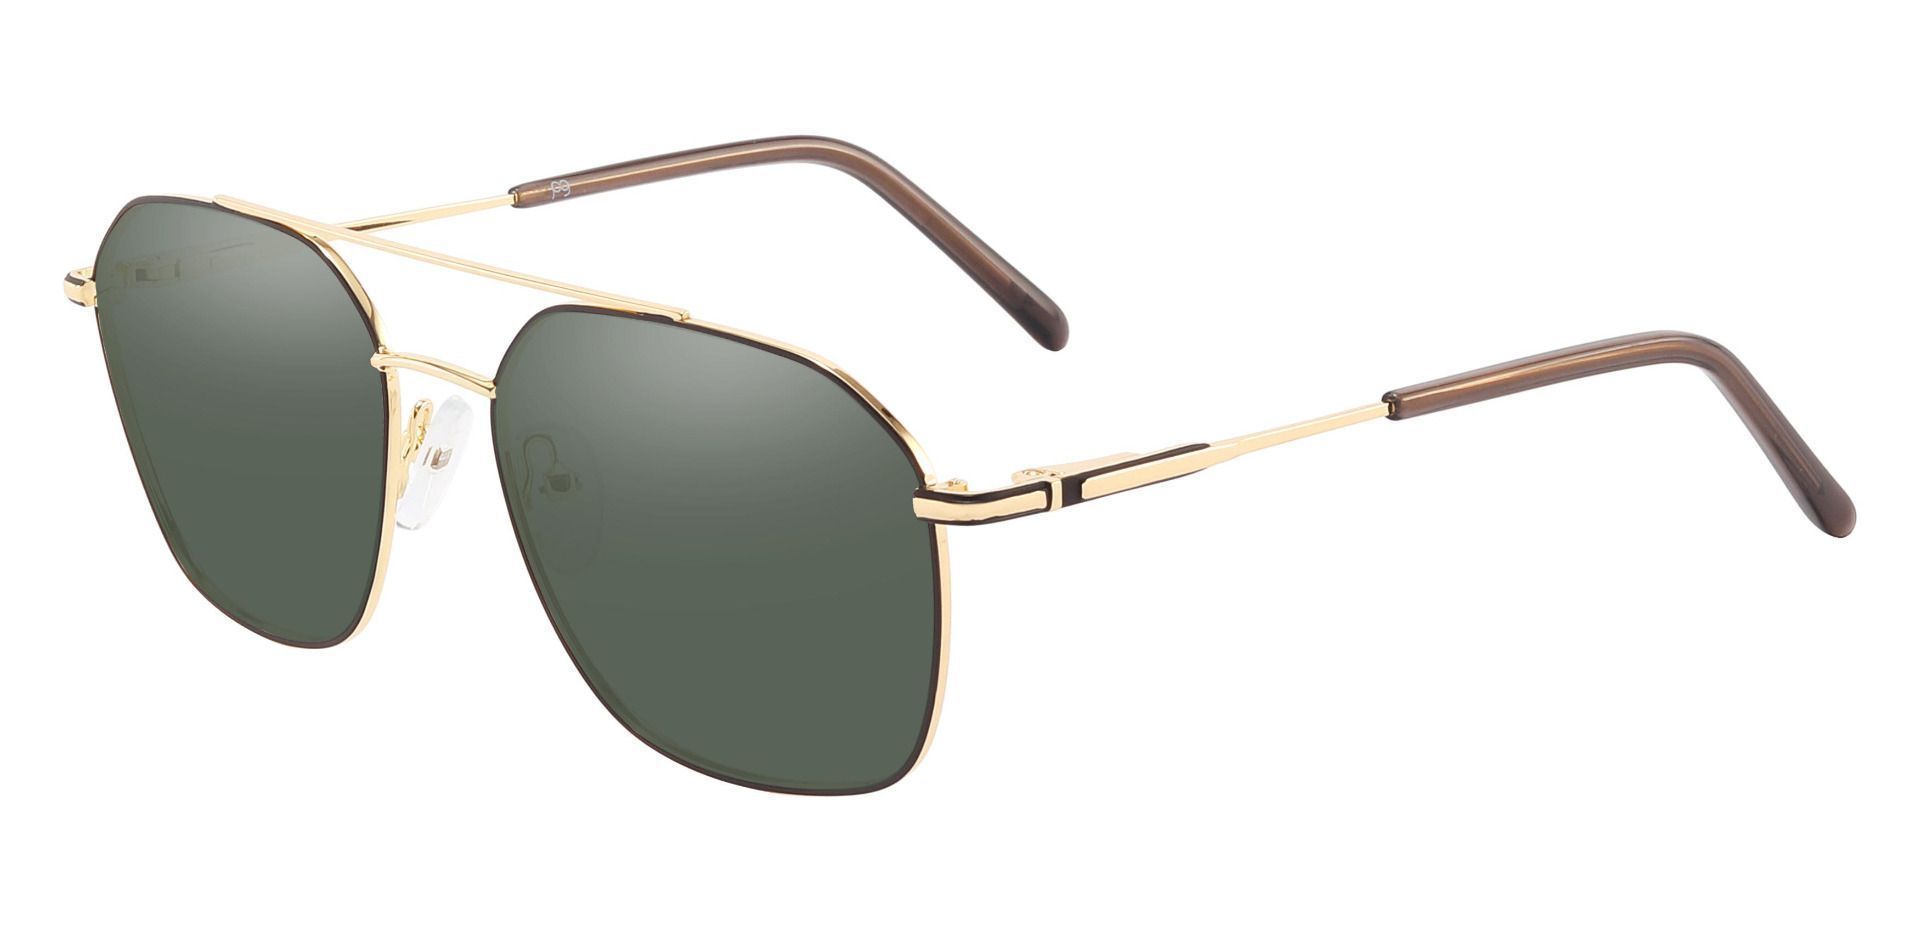 Harvey Aviator Lined Bifocal Sunglasses - Gold Frame With Green Lenses